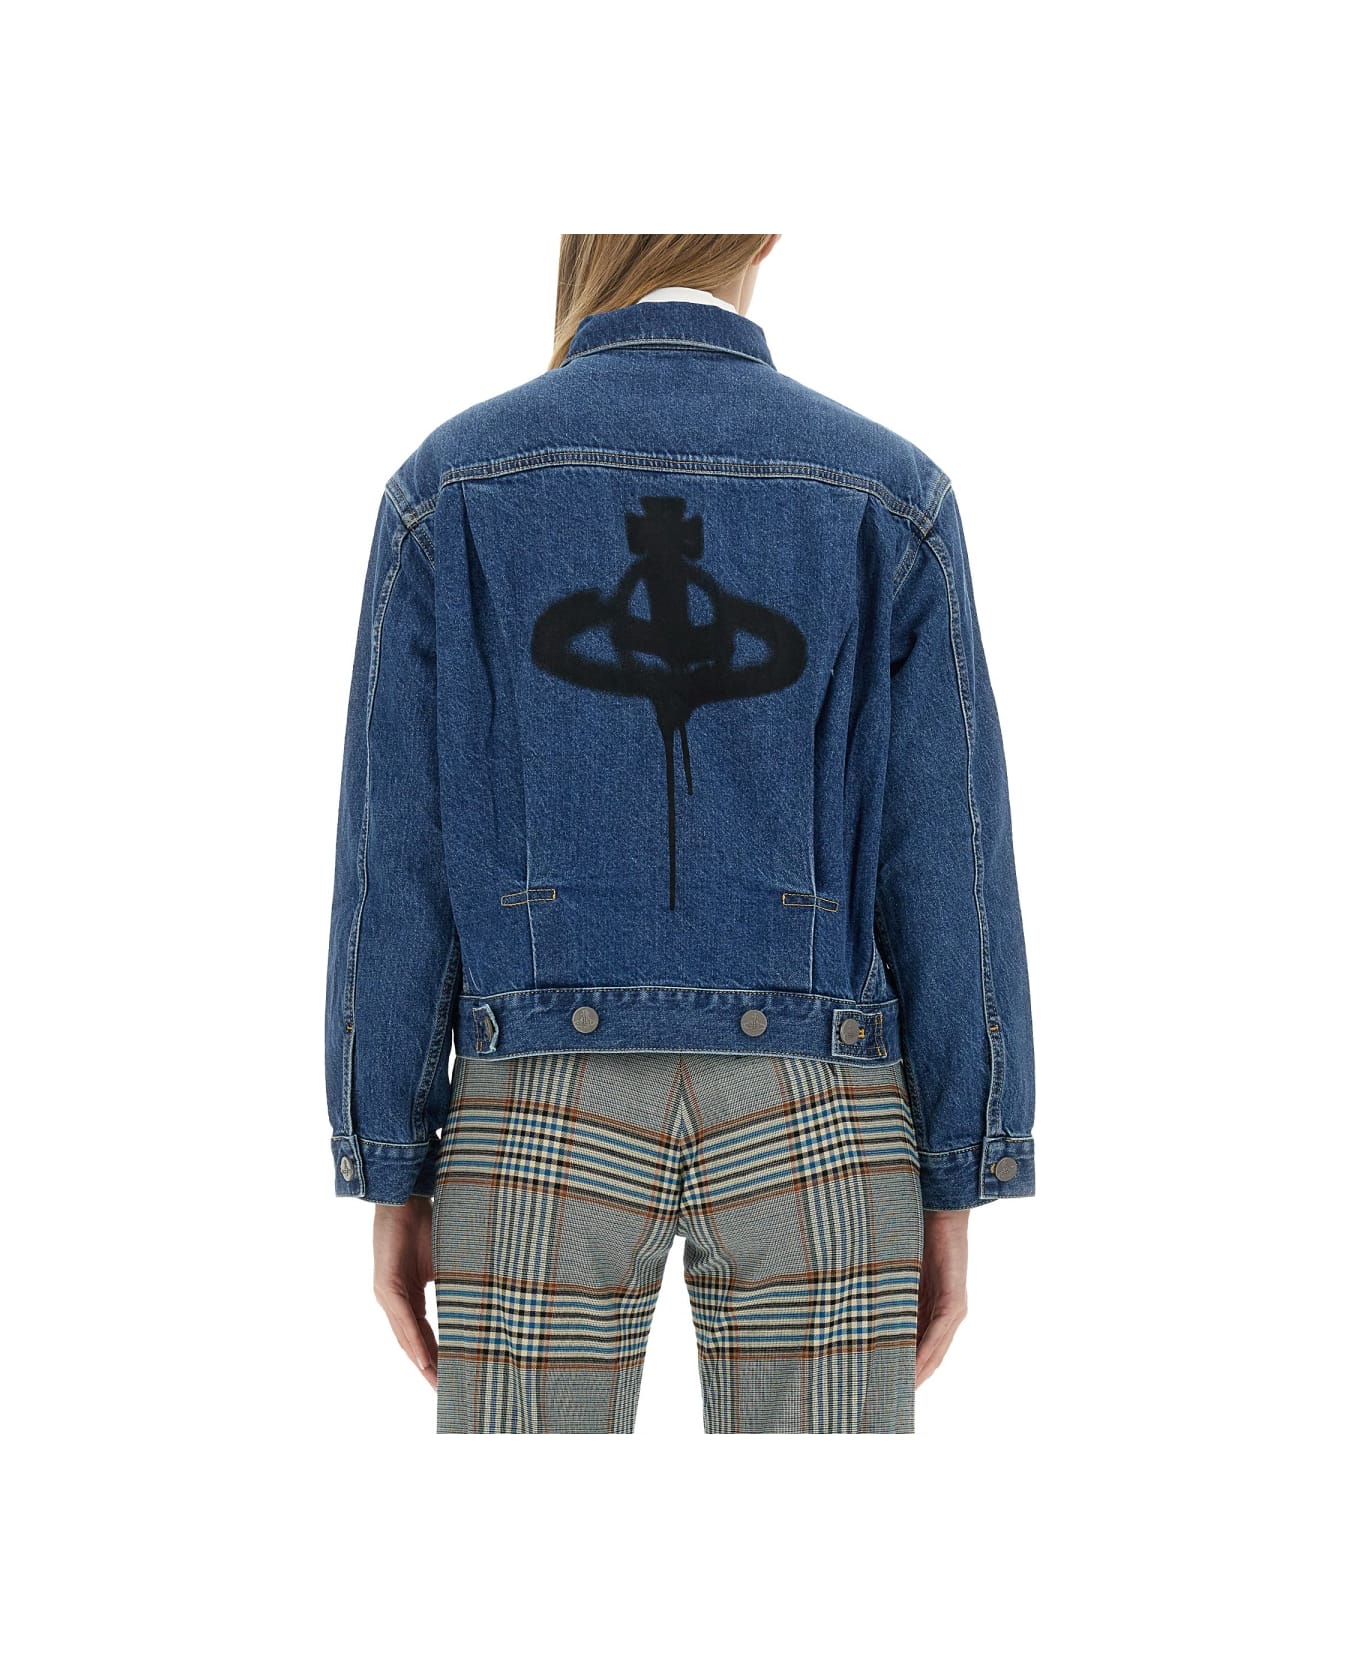 Vivienne Westwood Denim Jacket - BLUE